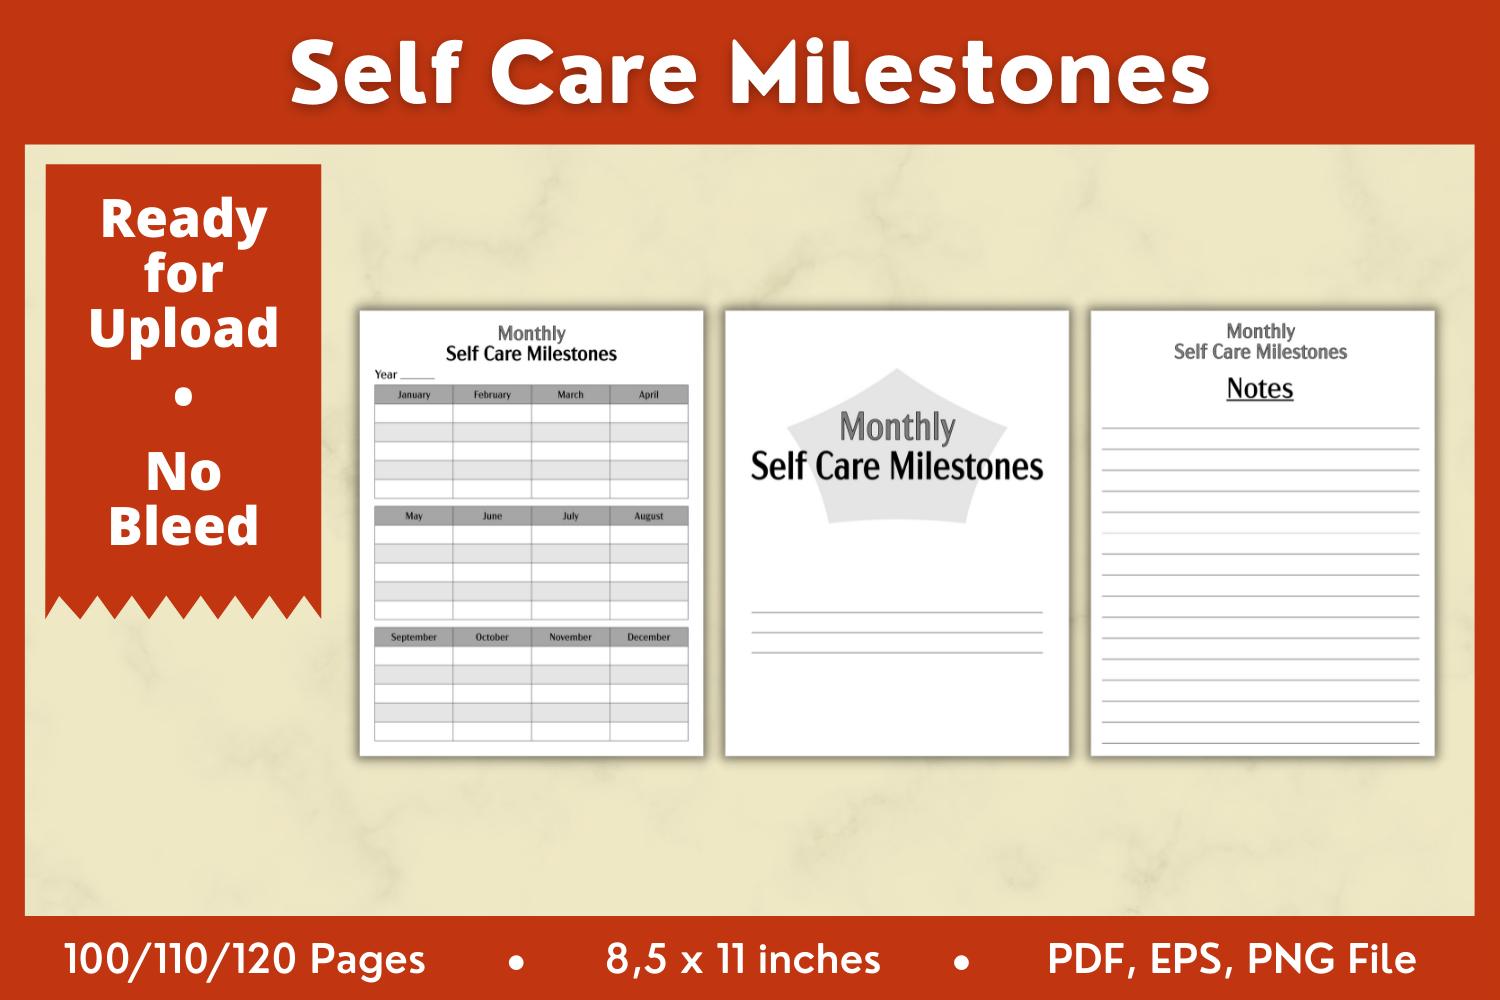 Self Care Milestones KDP Interior 8,5x11